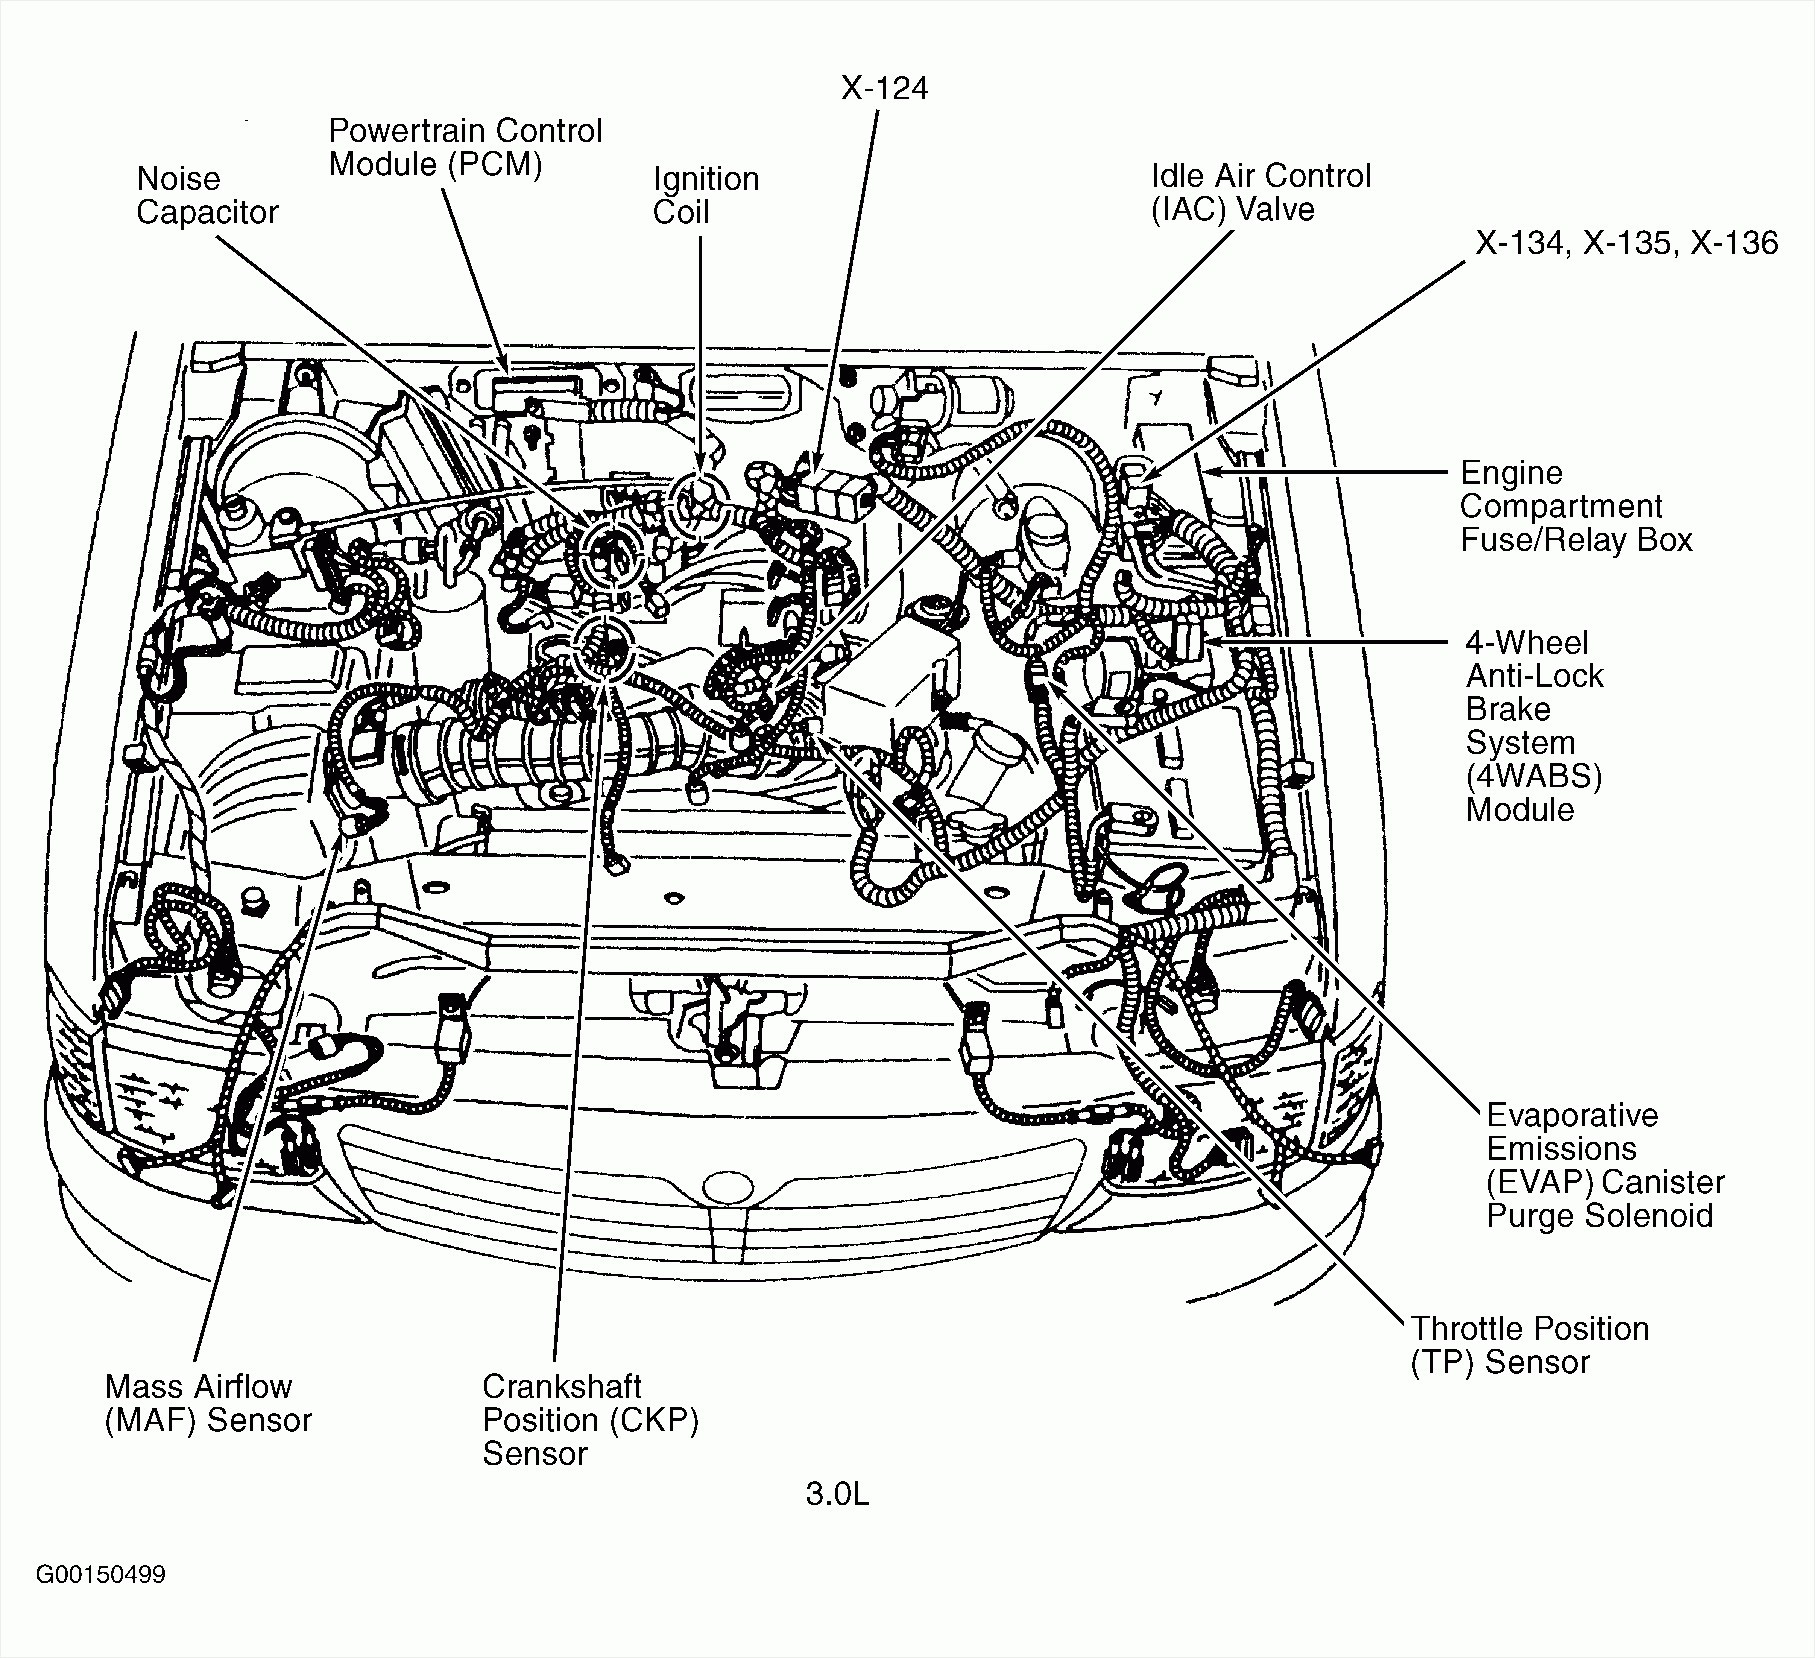 2000 Honda Accord V6 Engine Diagram Mazda 3 Engine Vacuum Diagram Wiring Diagram Paper Of 2000 Honda Accord V6 Engine Diagram